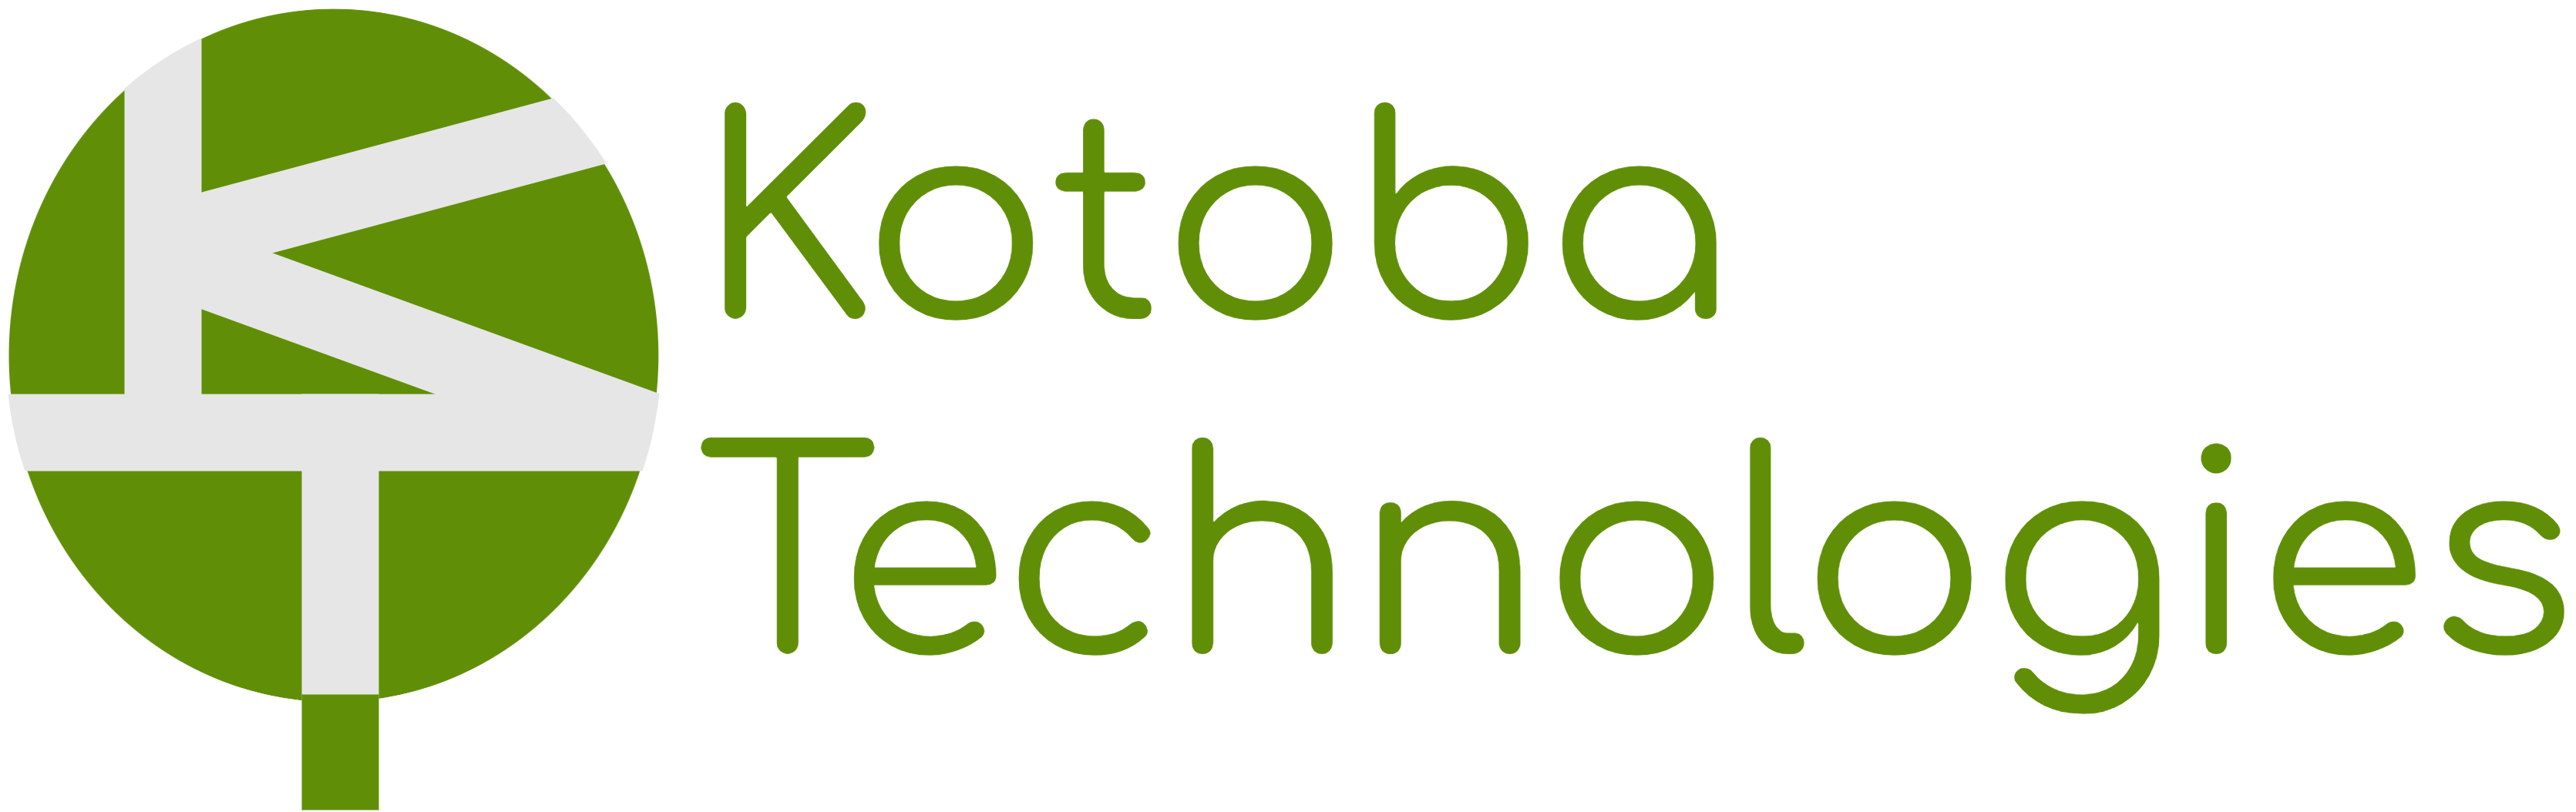 Kotoba Technologies, Inc.